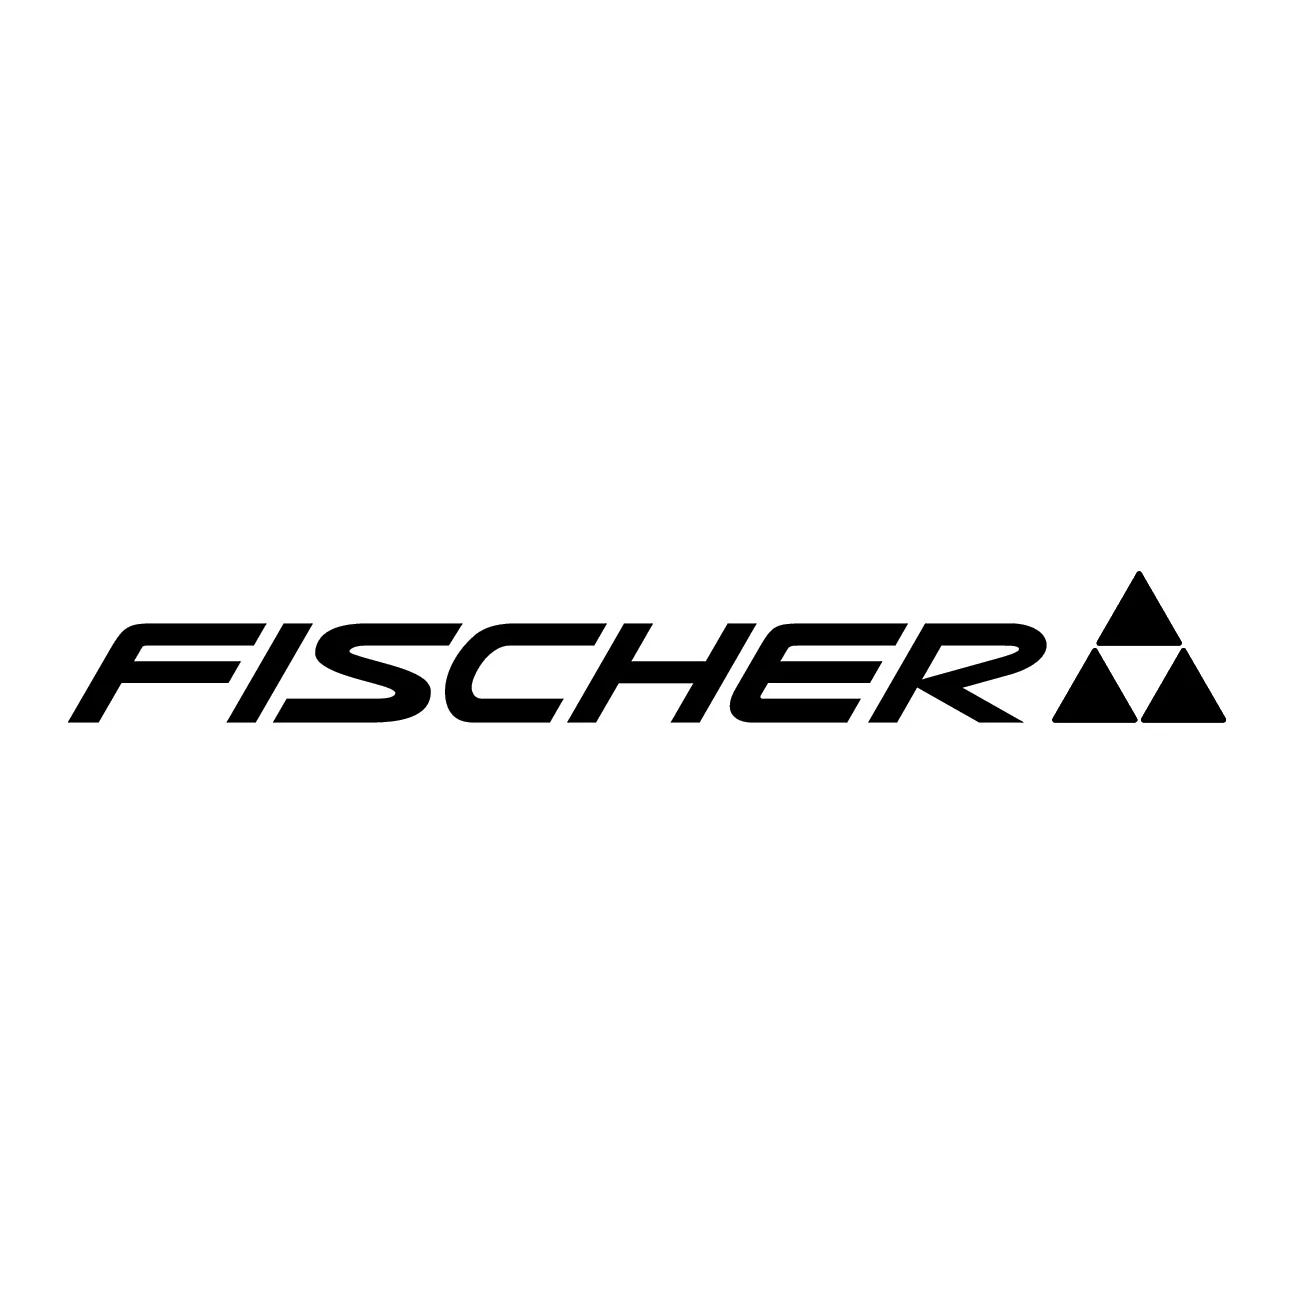 Fisher логотип